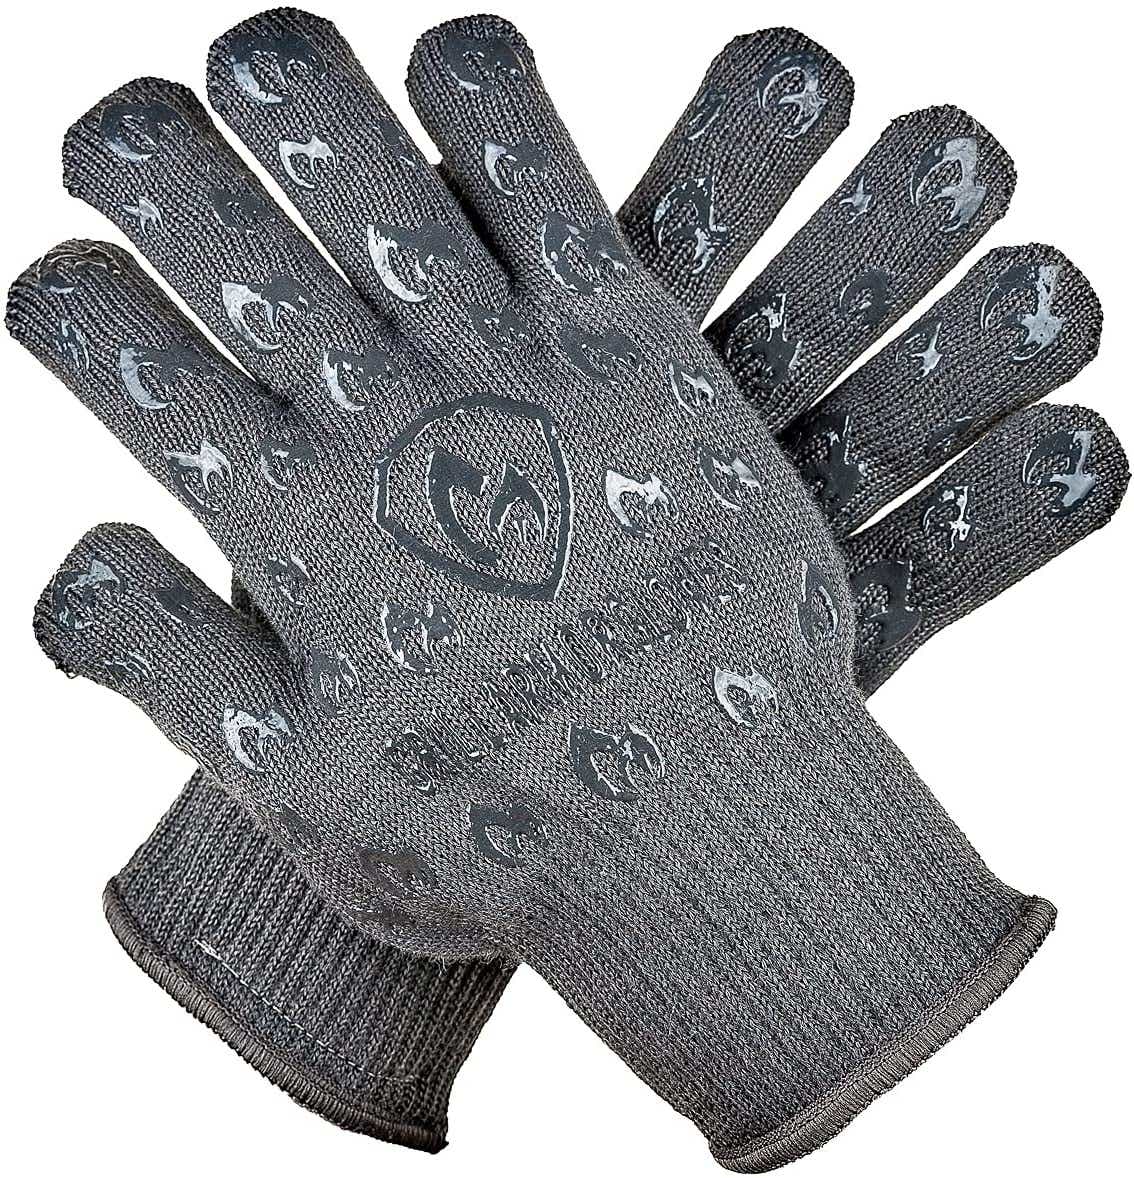 Grill Armor grey gloves